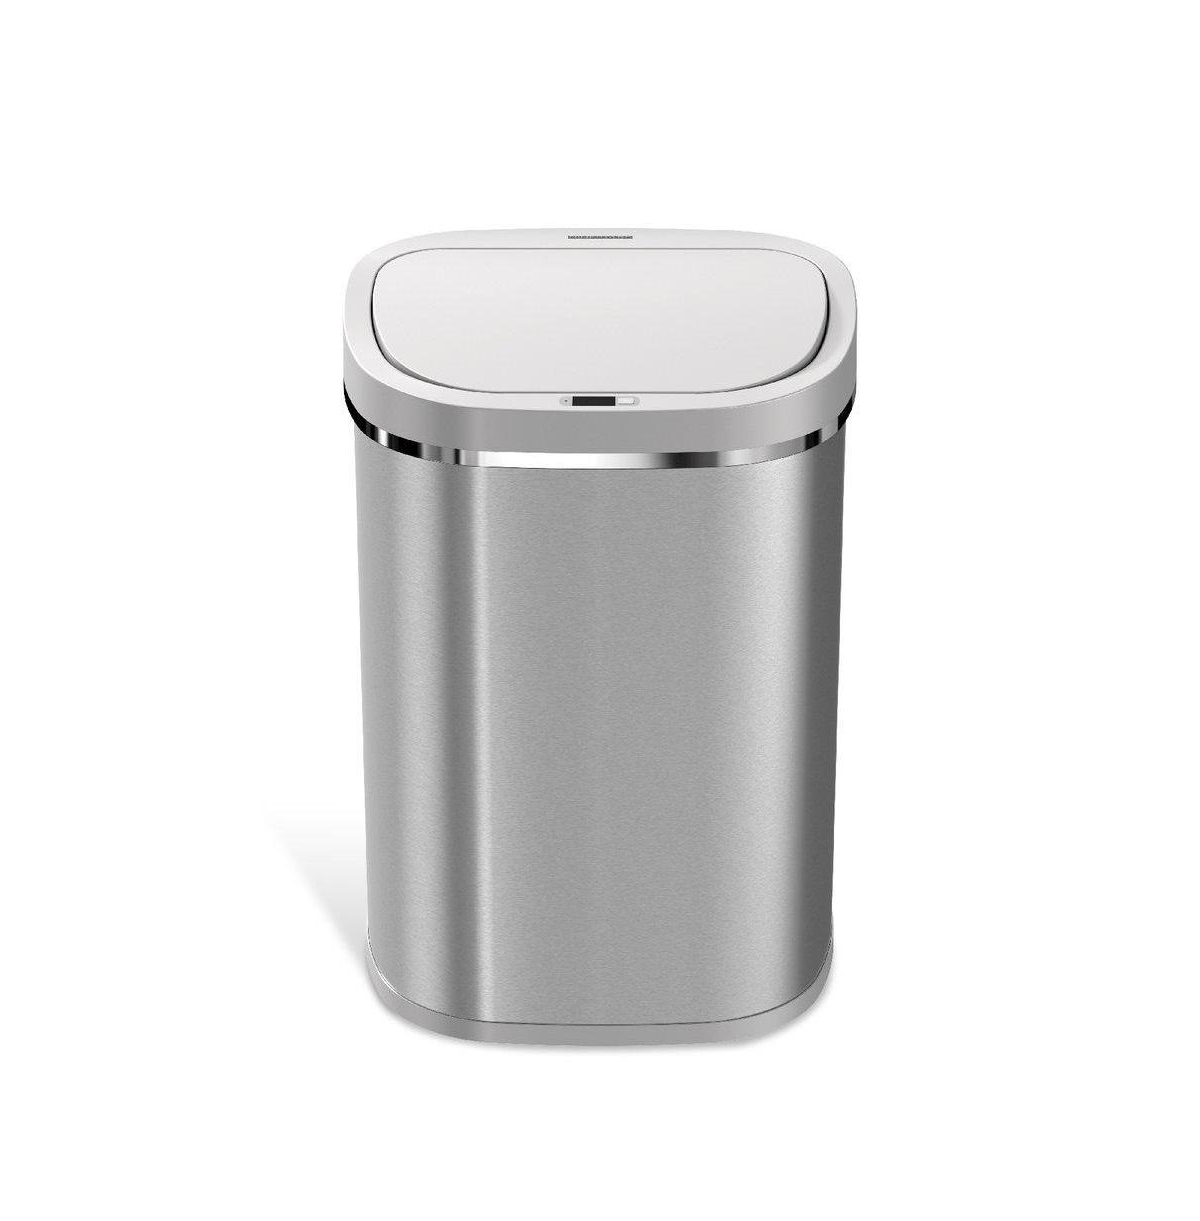 Rectangular Motion Sensor Trash Can, 21.1 Gallon - Silver Tone